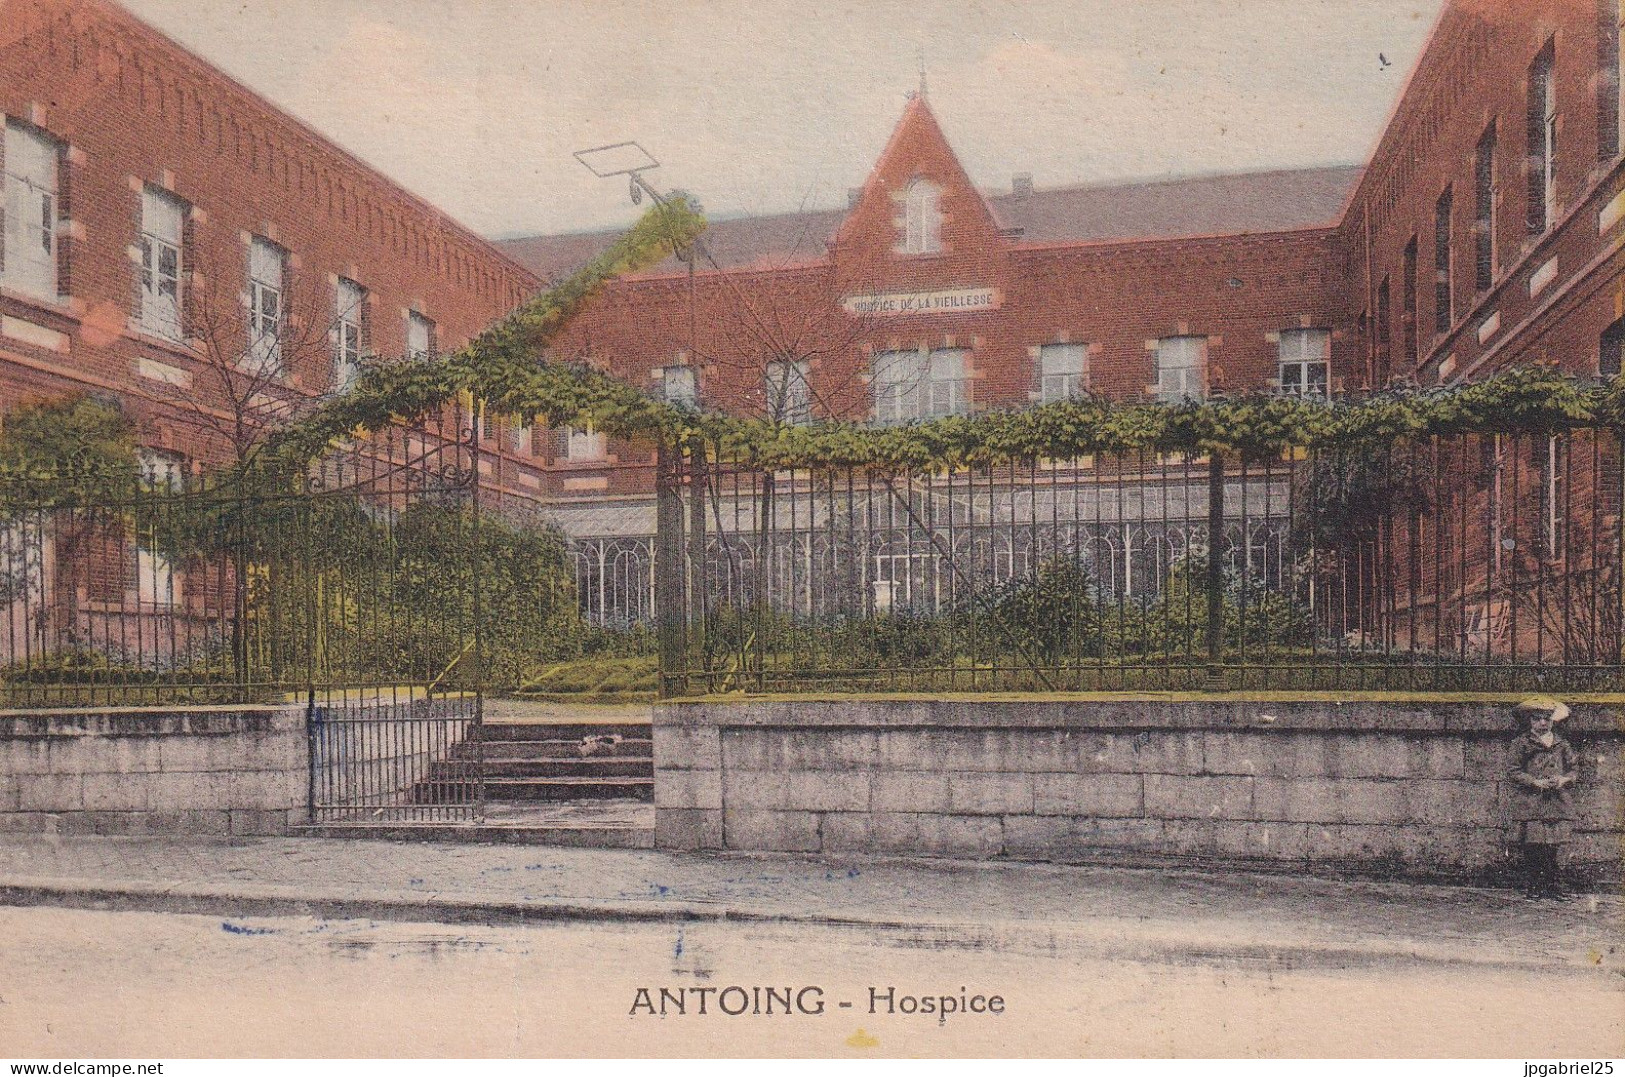 LAP Antoing Hospice - Antoing